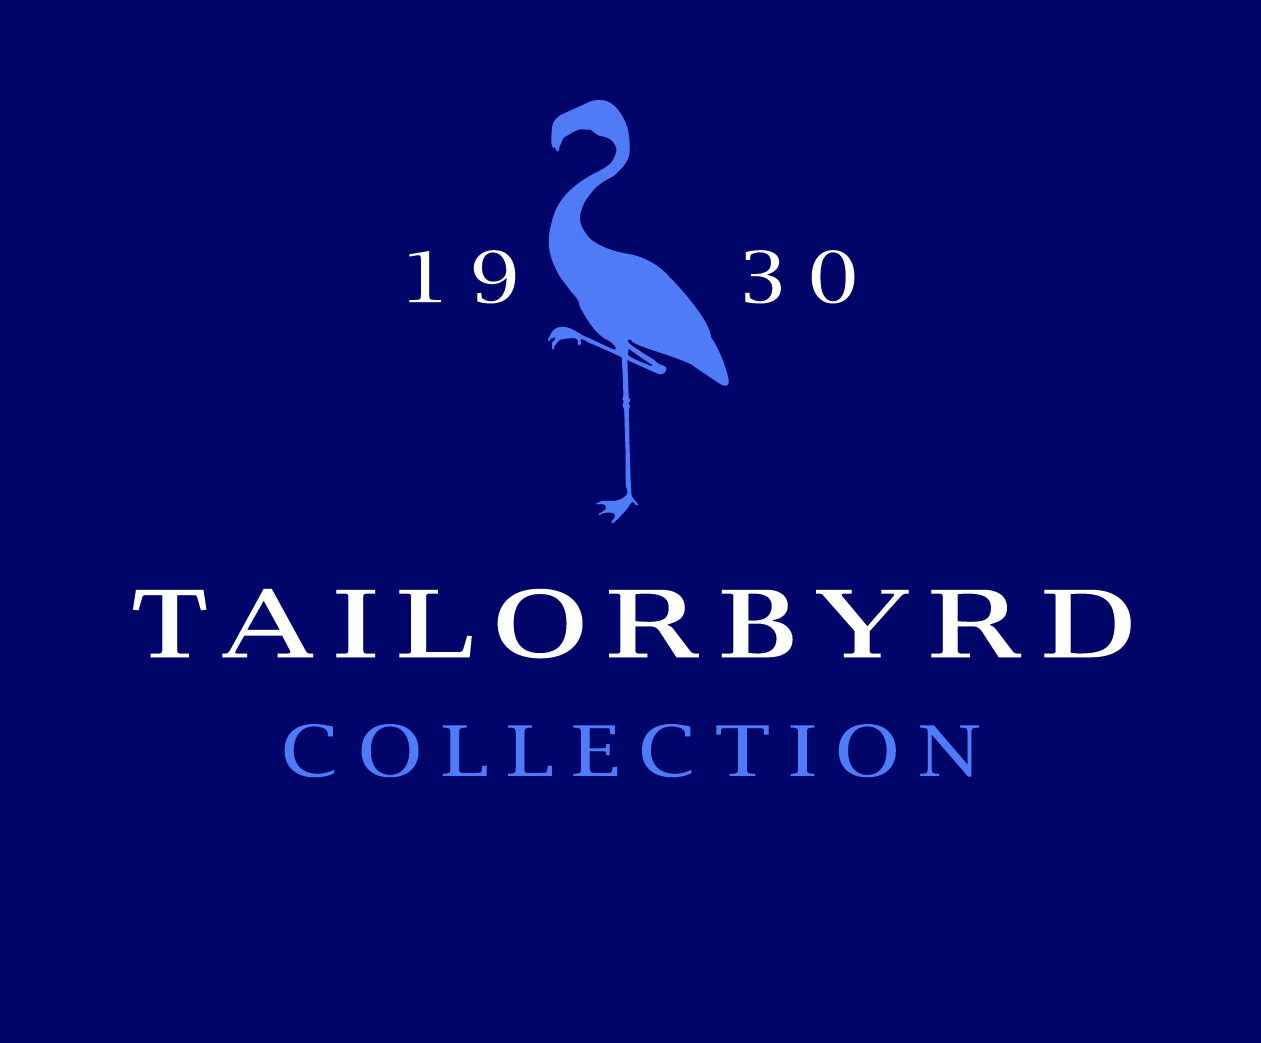 TailorByrd's logo